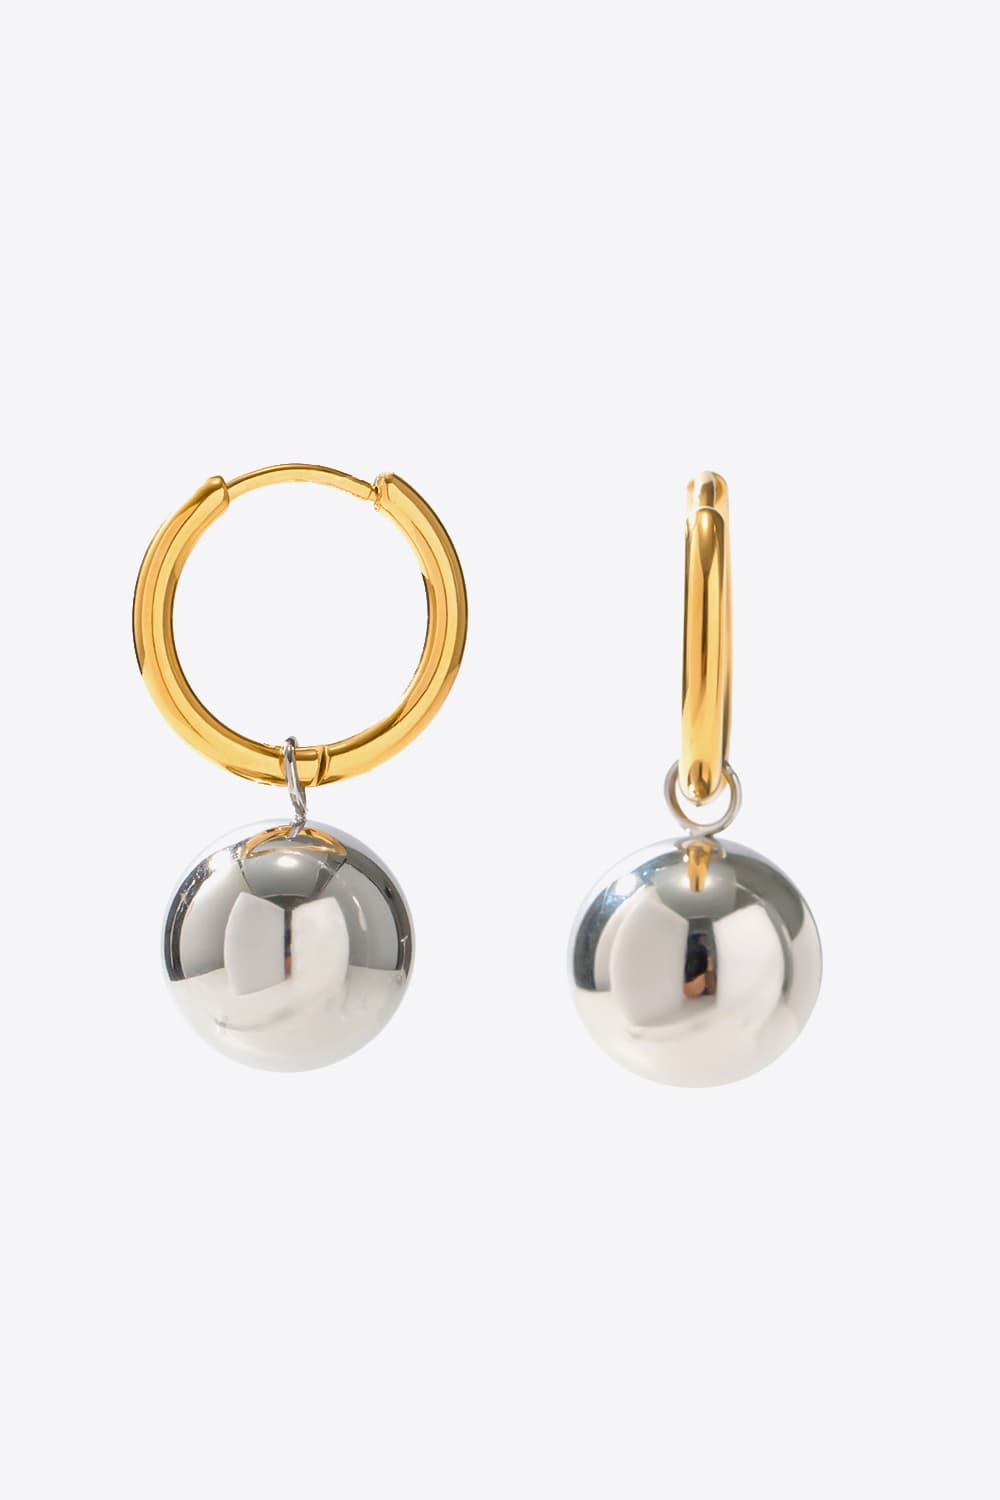 White Smoke 18K Gold-Plated Copper Ball Drop Earrings Sentient Beauty Fashions earrings